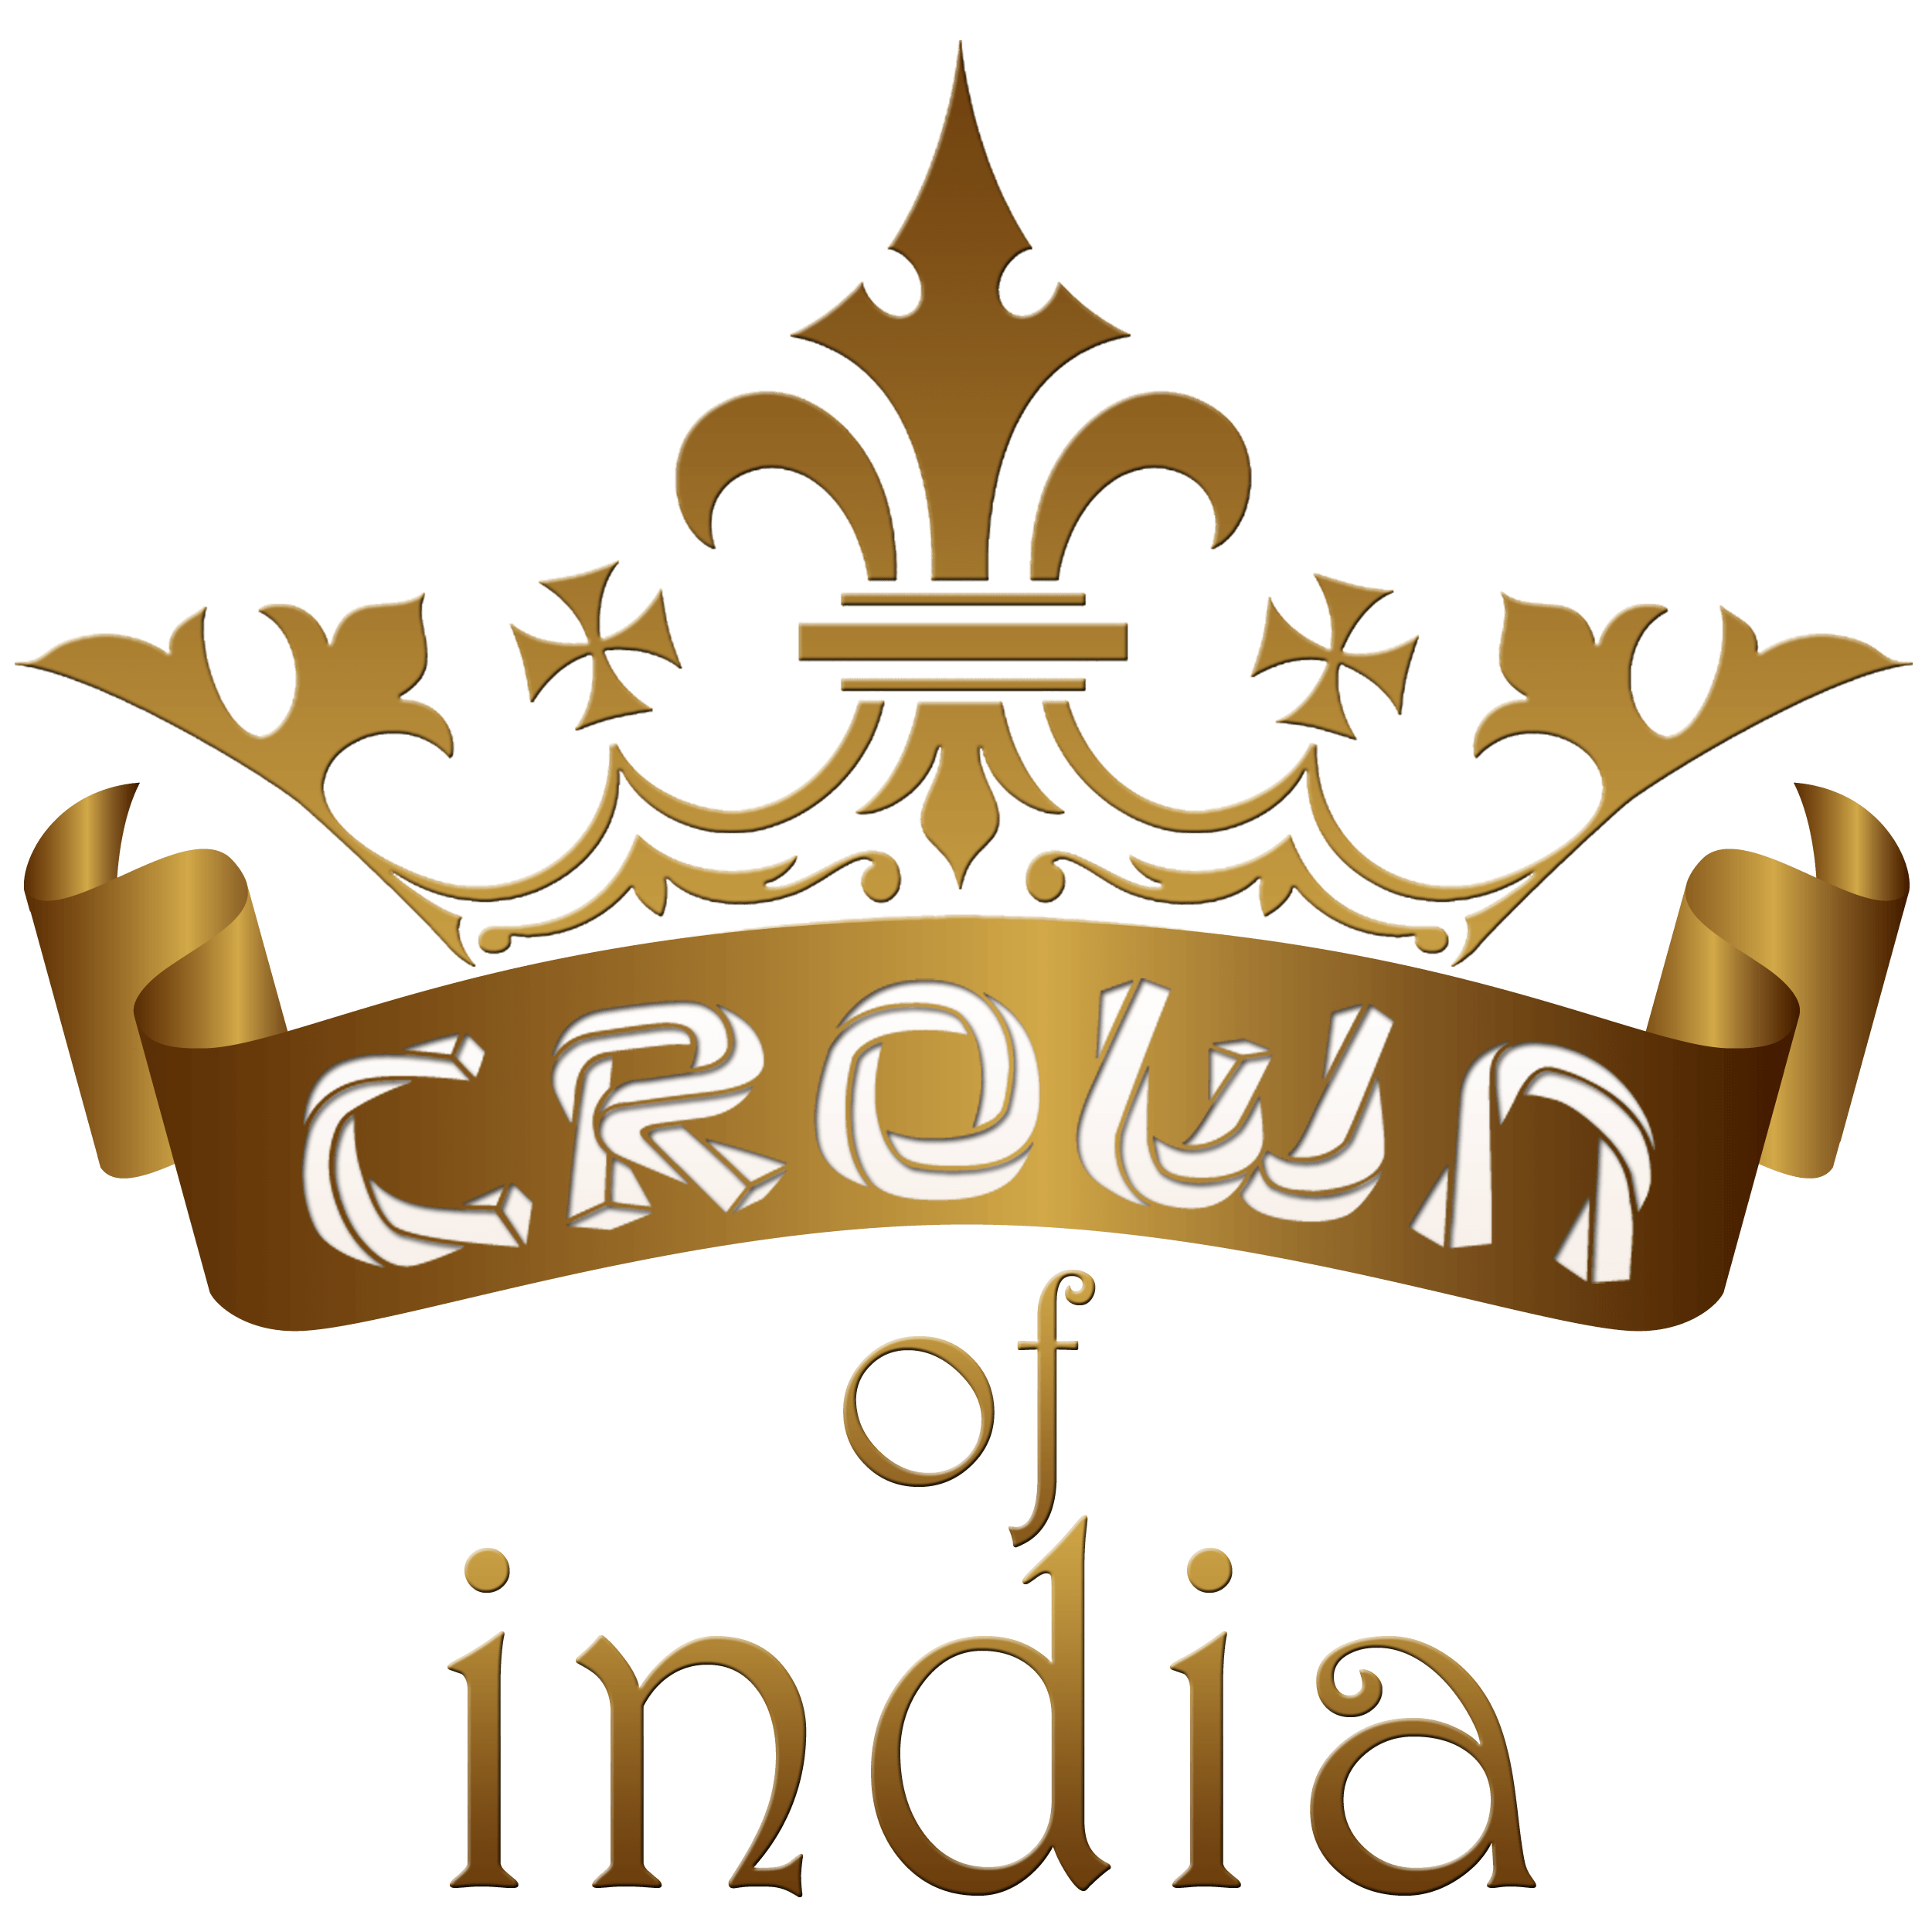 Swiss Crown Logo - Crown of India